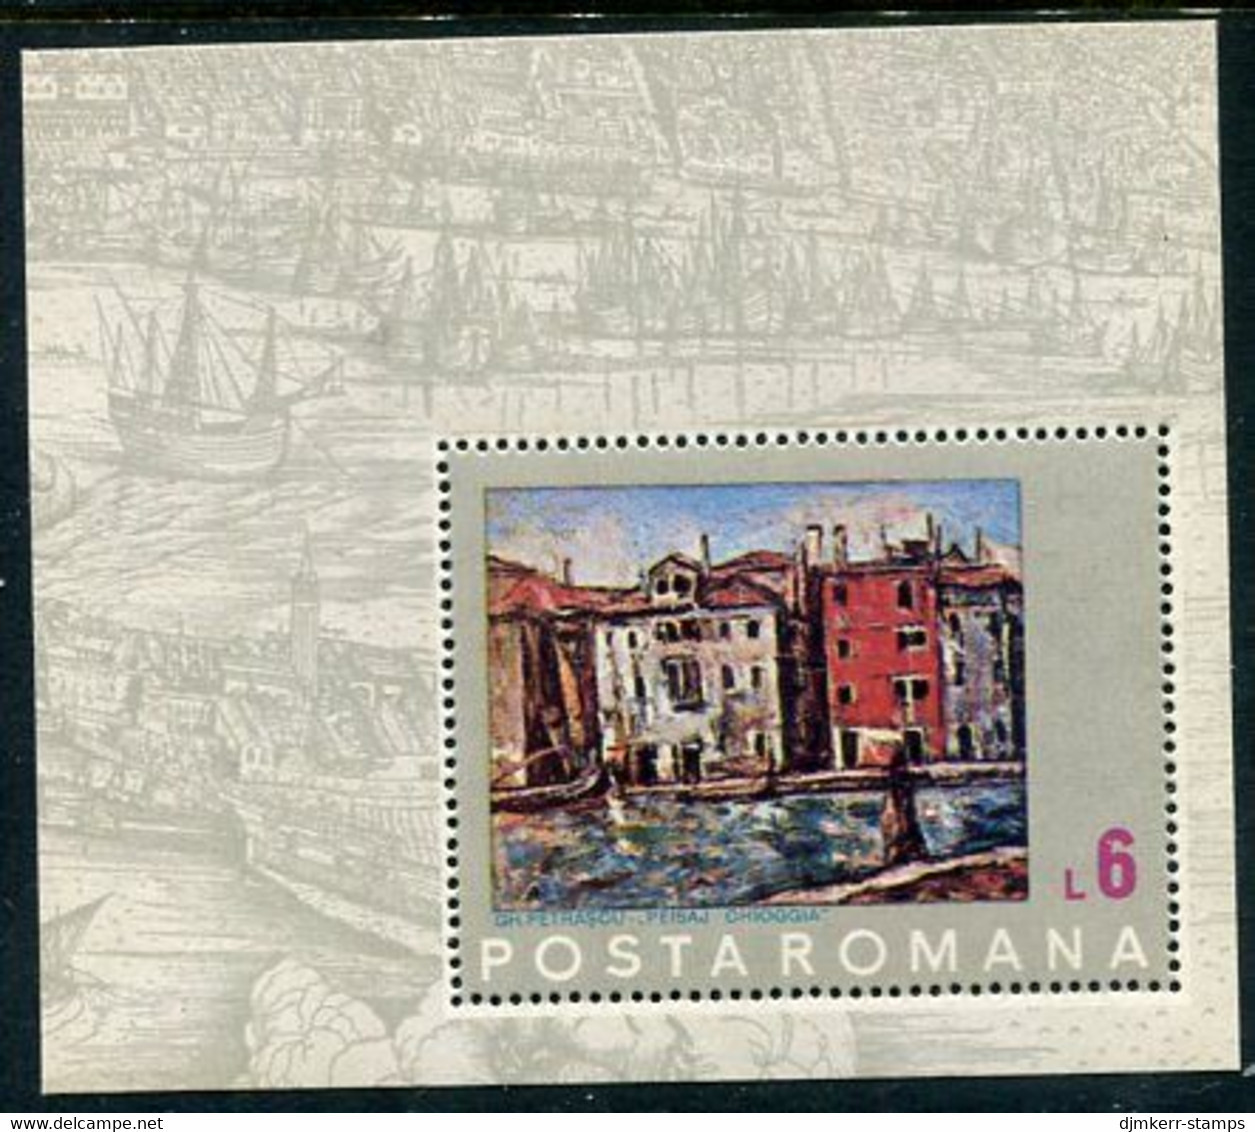 ROMANIA 1972 UNESCO Save Venice Block MNH / **.  Michel Block 99 - Ungebraucht